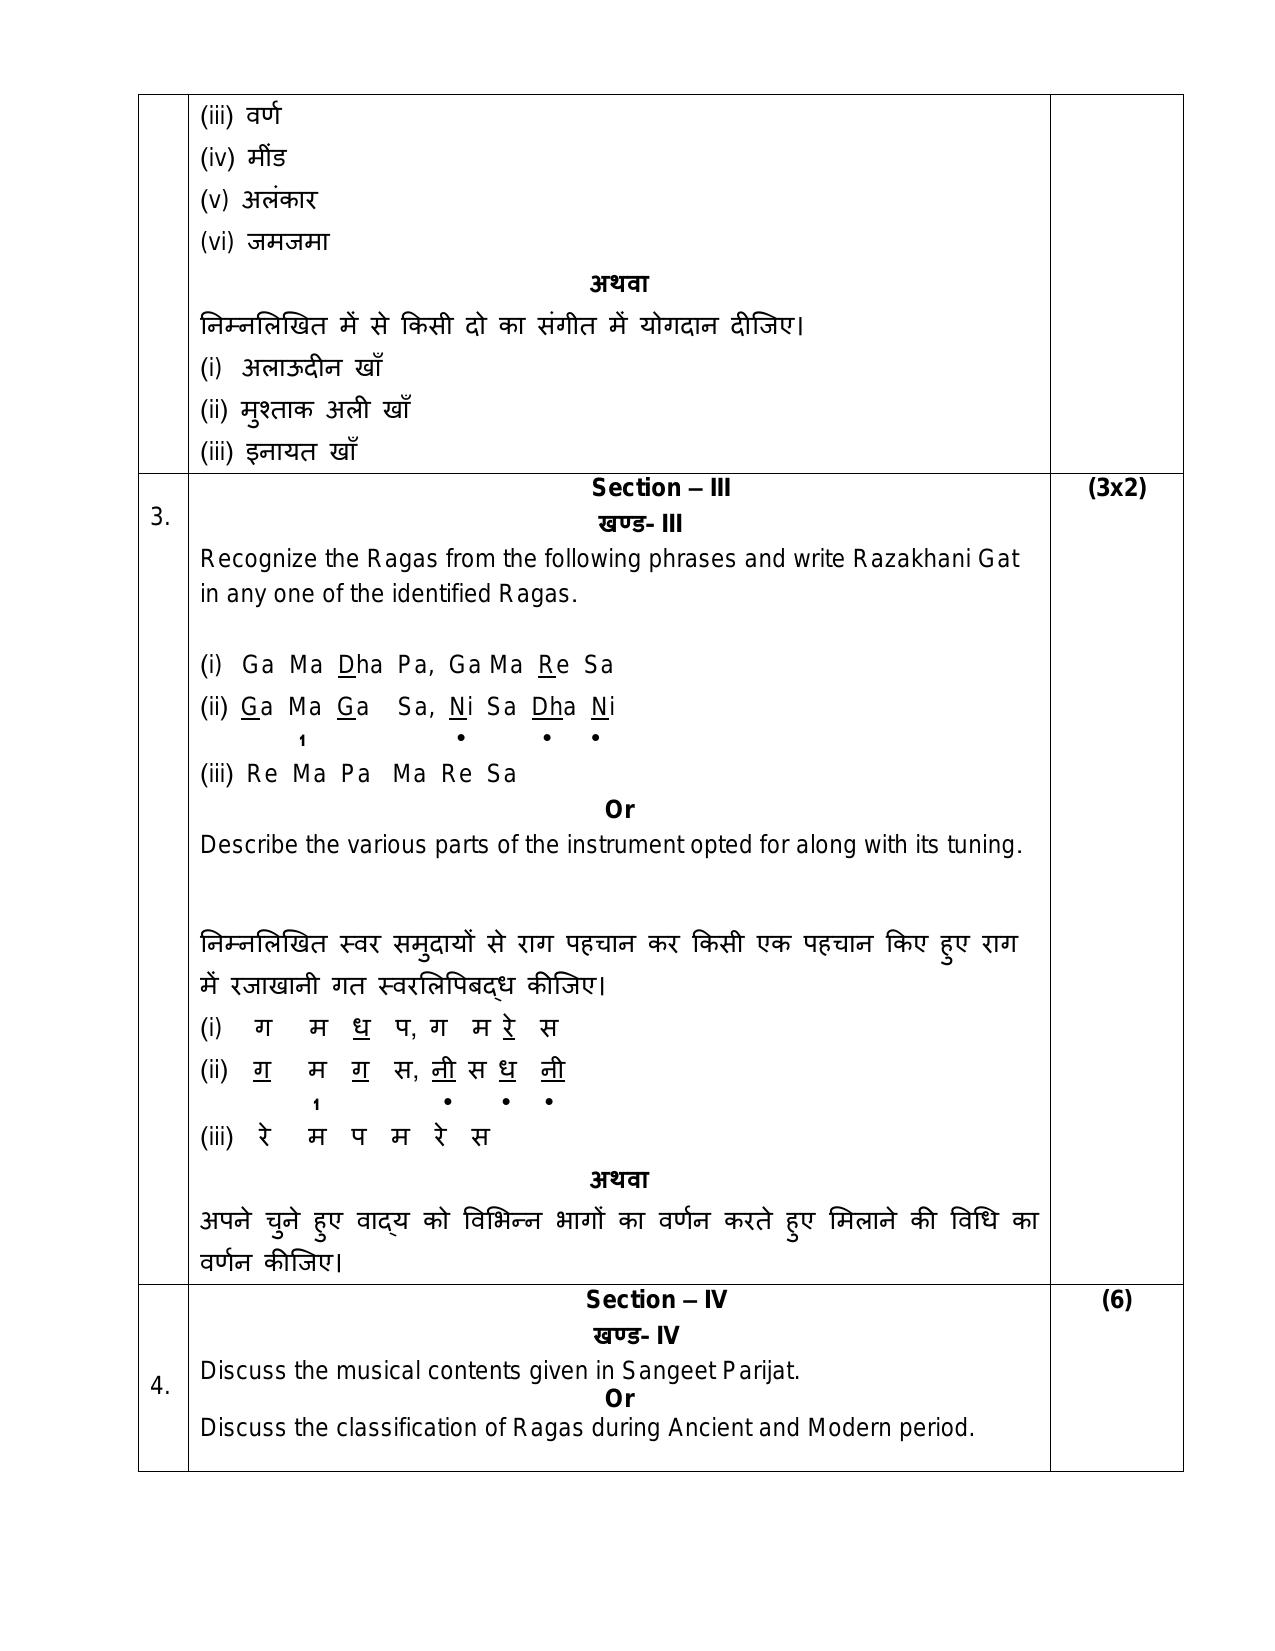 CBSE Class 12 Hindustani Music (Melodic) -Sample Paper 2019-20 - Page 4